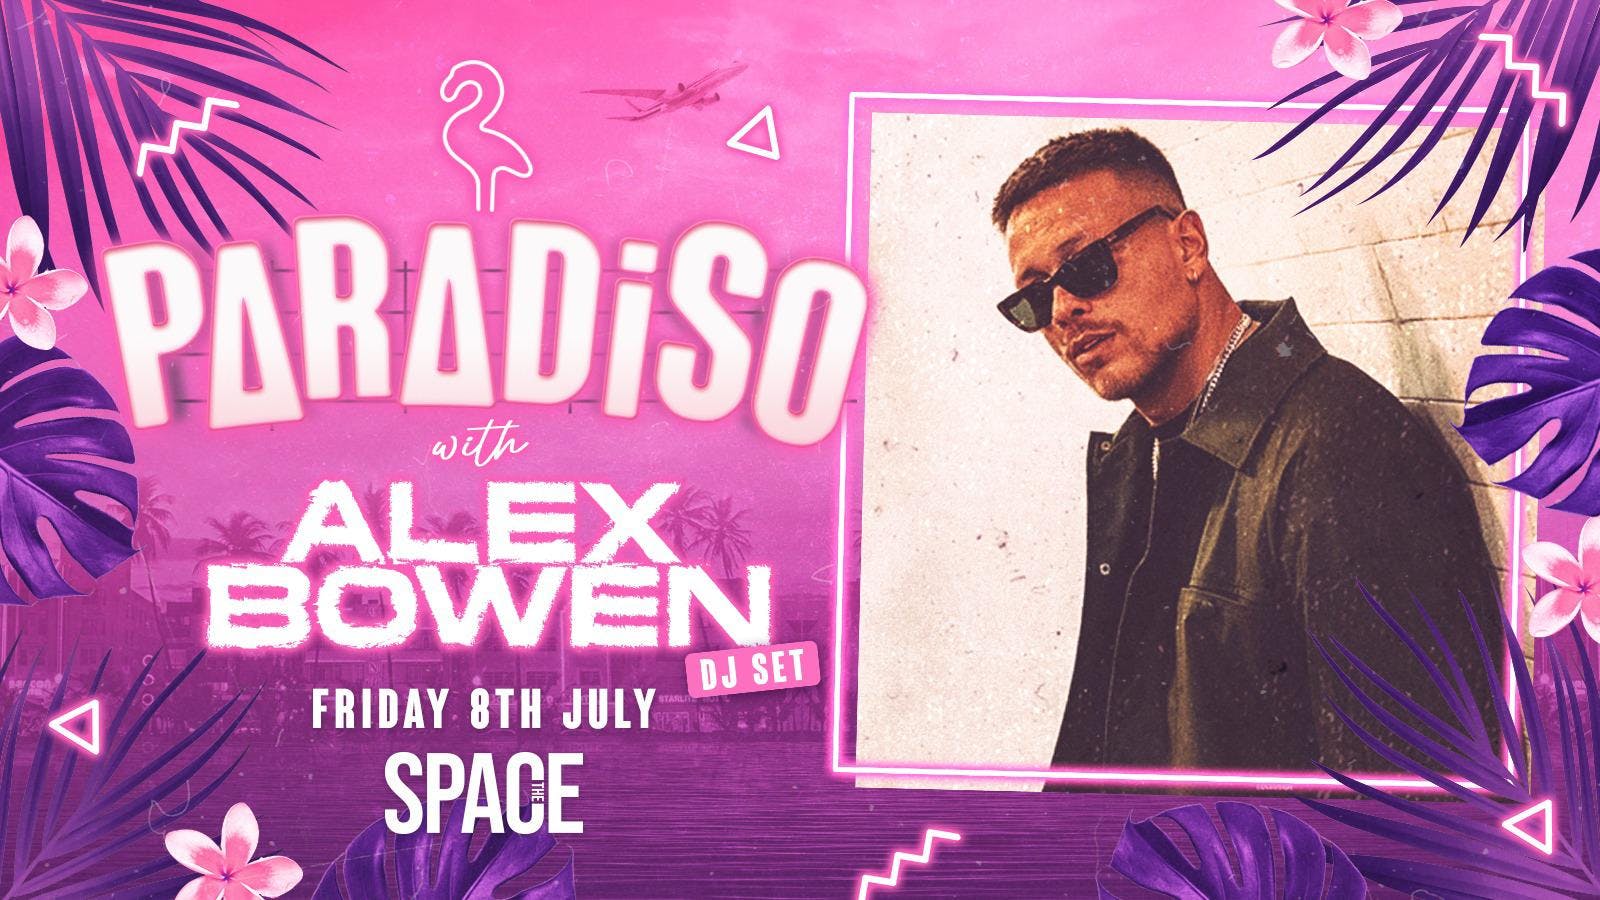 Social Media Superstar Alex Bowen – LIVE 8th July at Paradiso, Space!